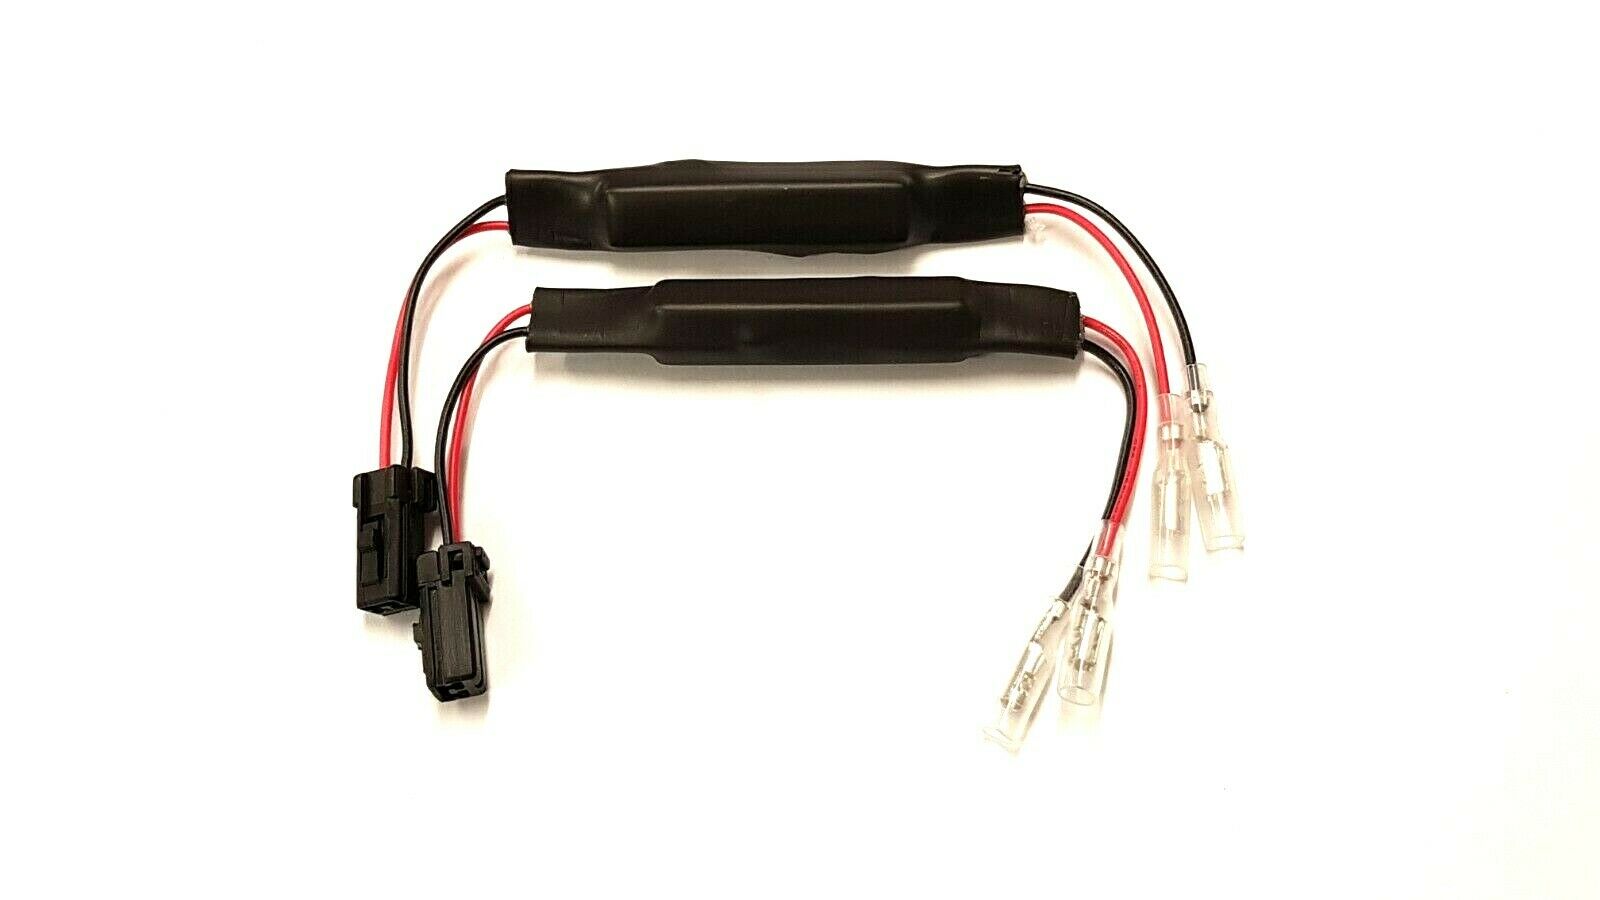 Adapter Kabel mit Widerstand LED Blinker für Harley Davidson Modelle 10W 20Ohm